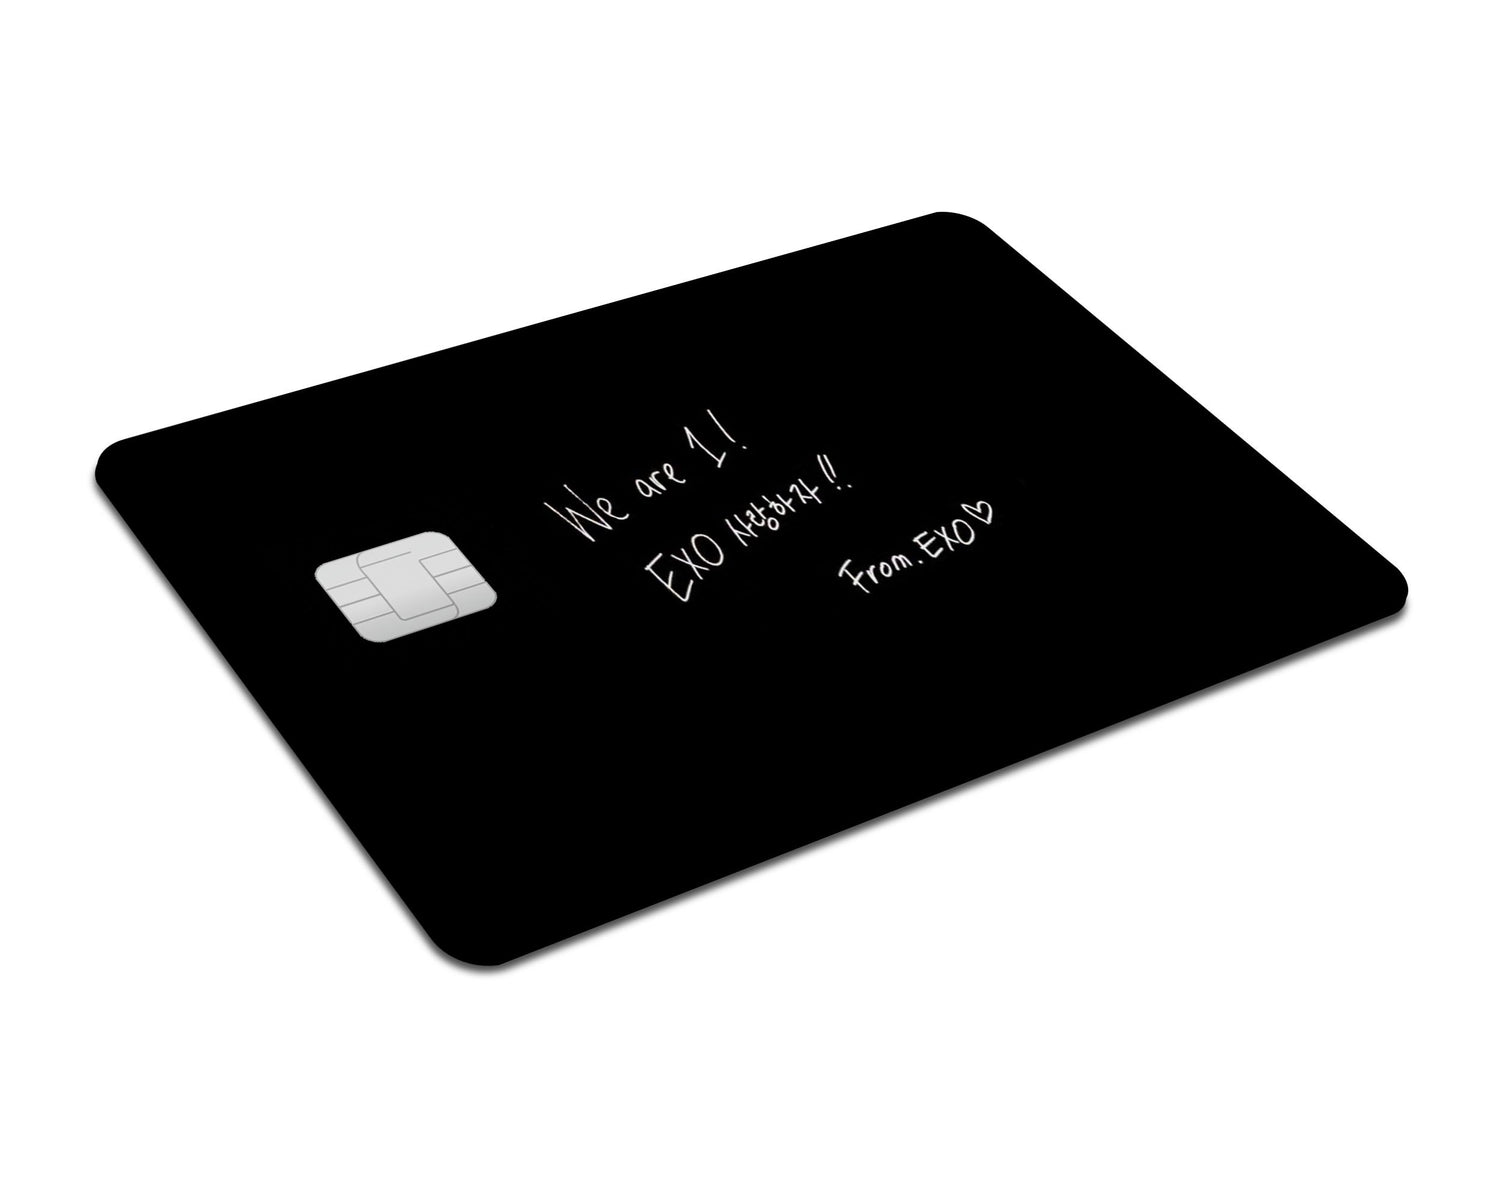 Flex Designs Credit Card We are Exo Full Skins - Kpop EXO & Debit Card Skin